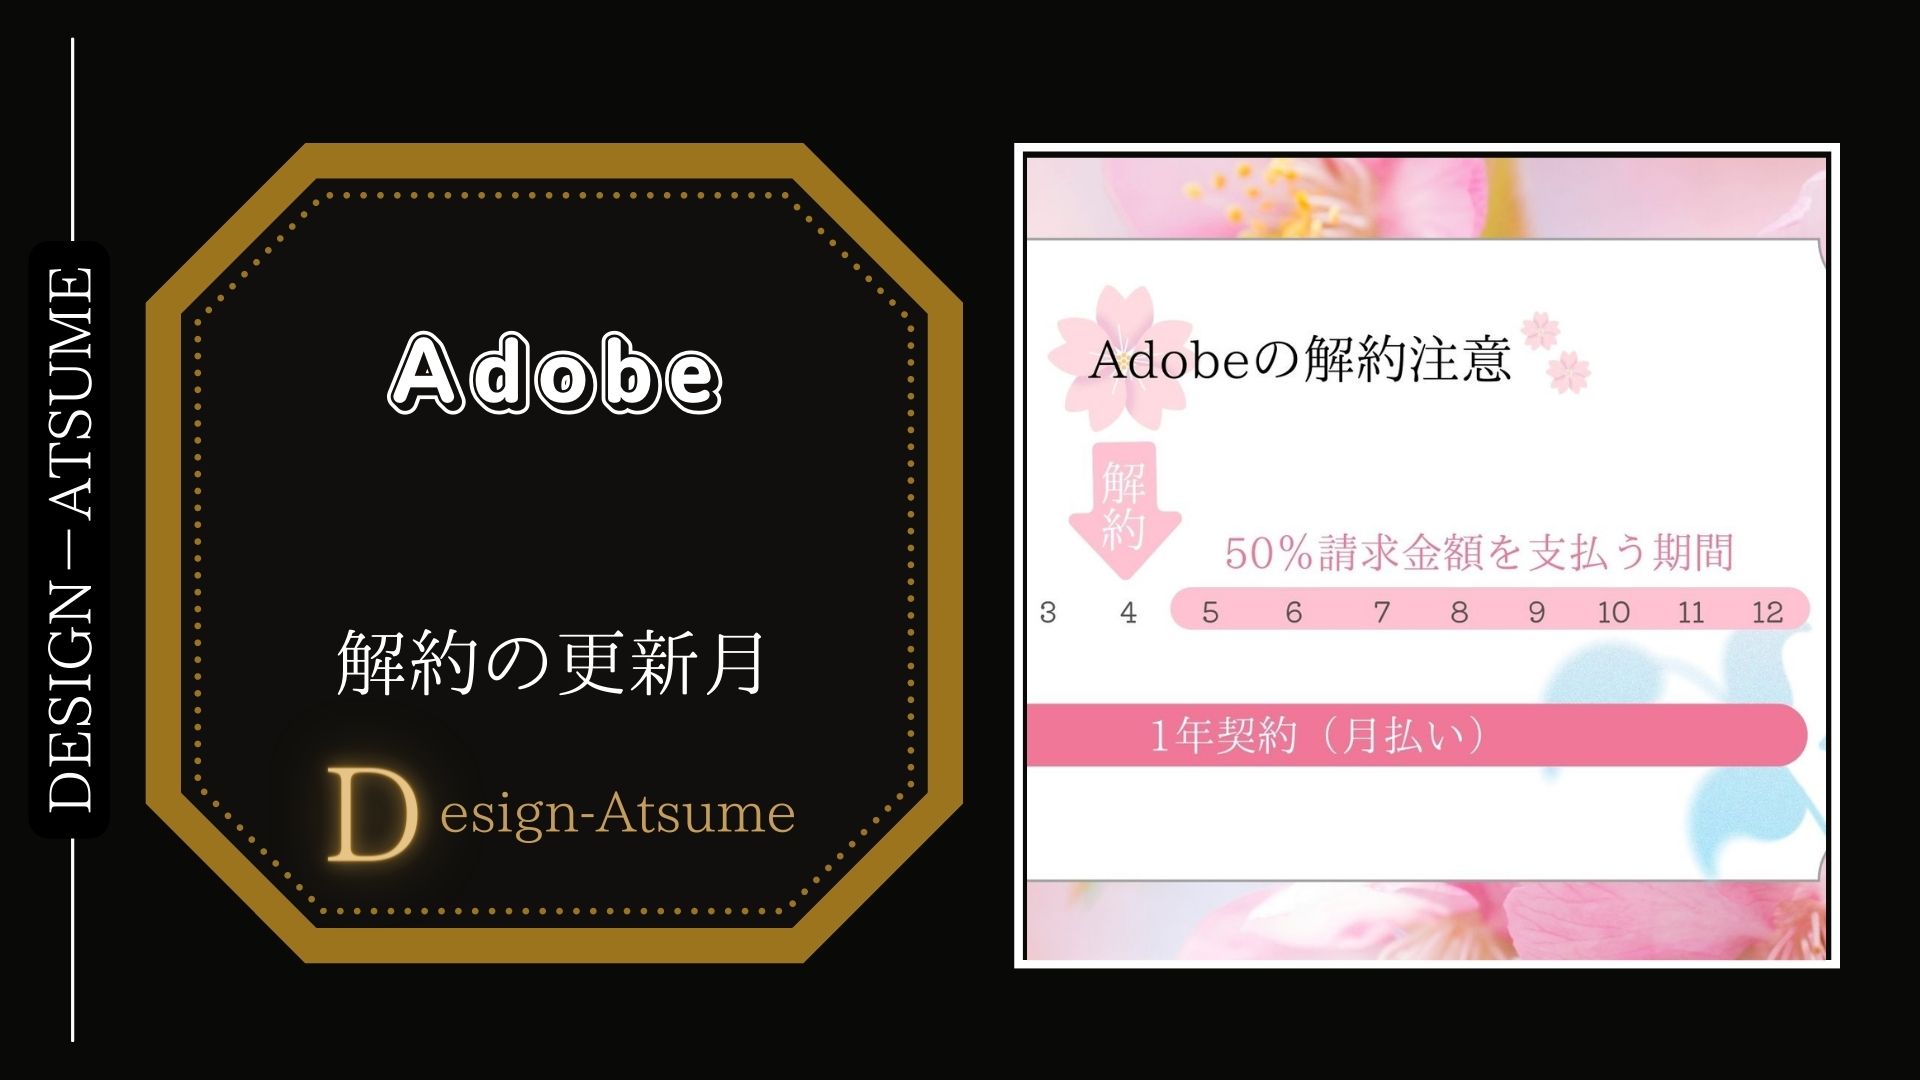 Adobe koushin